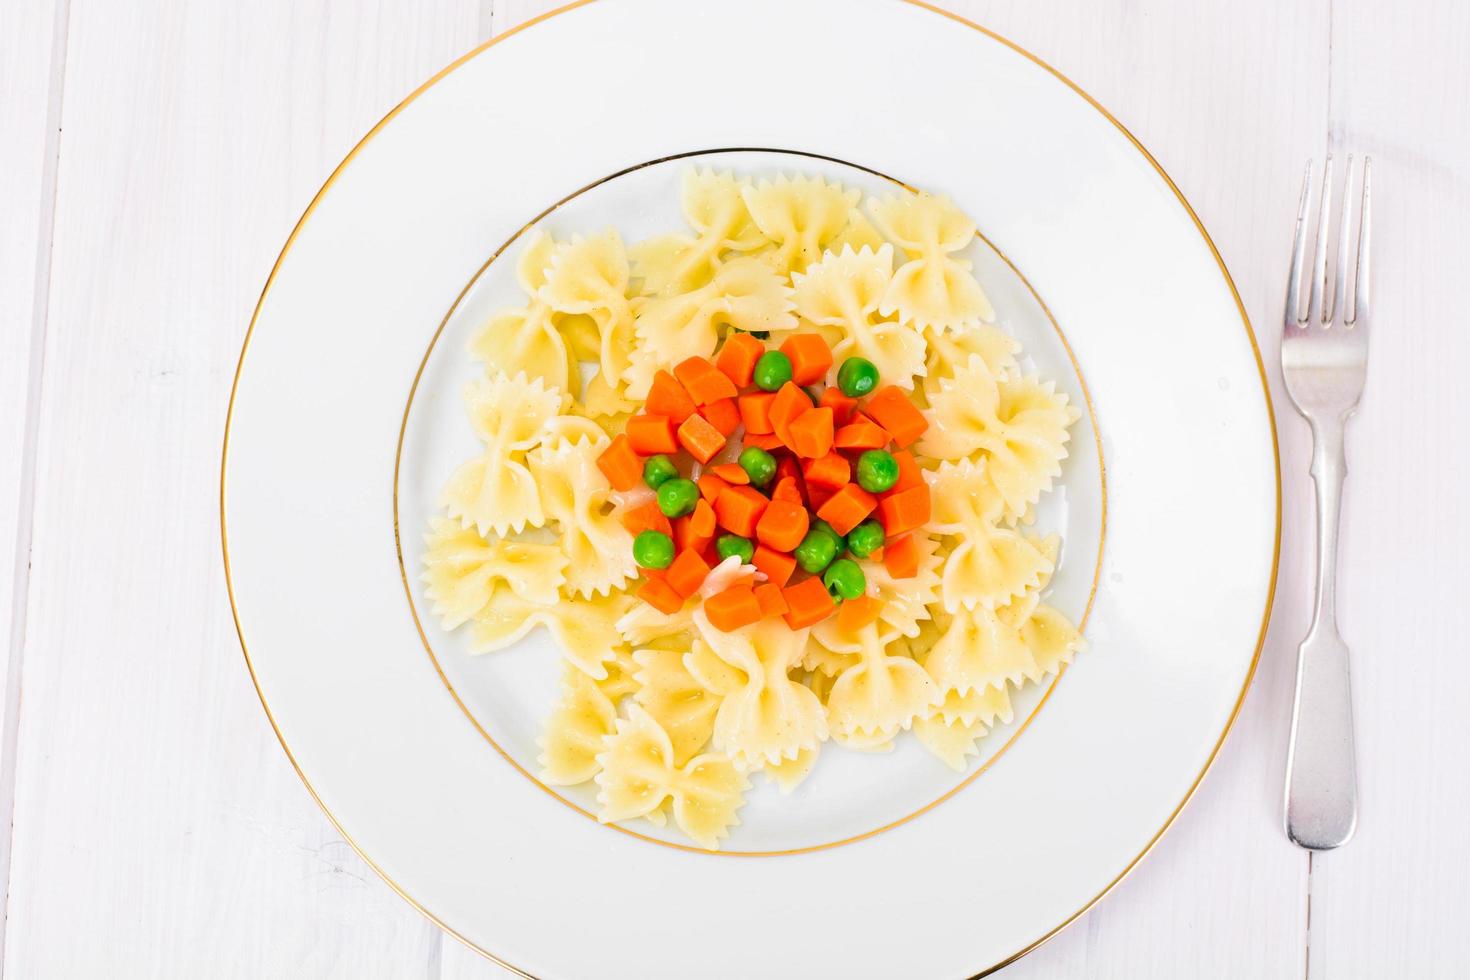 espaguetis de pasta con zanahorias picadas y guisantes verdes foto